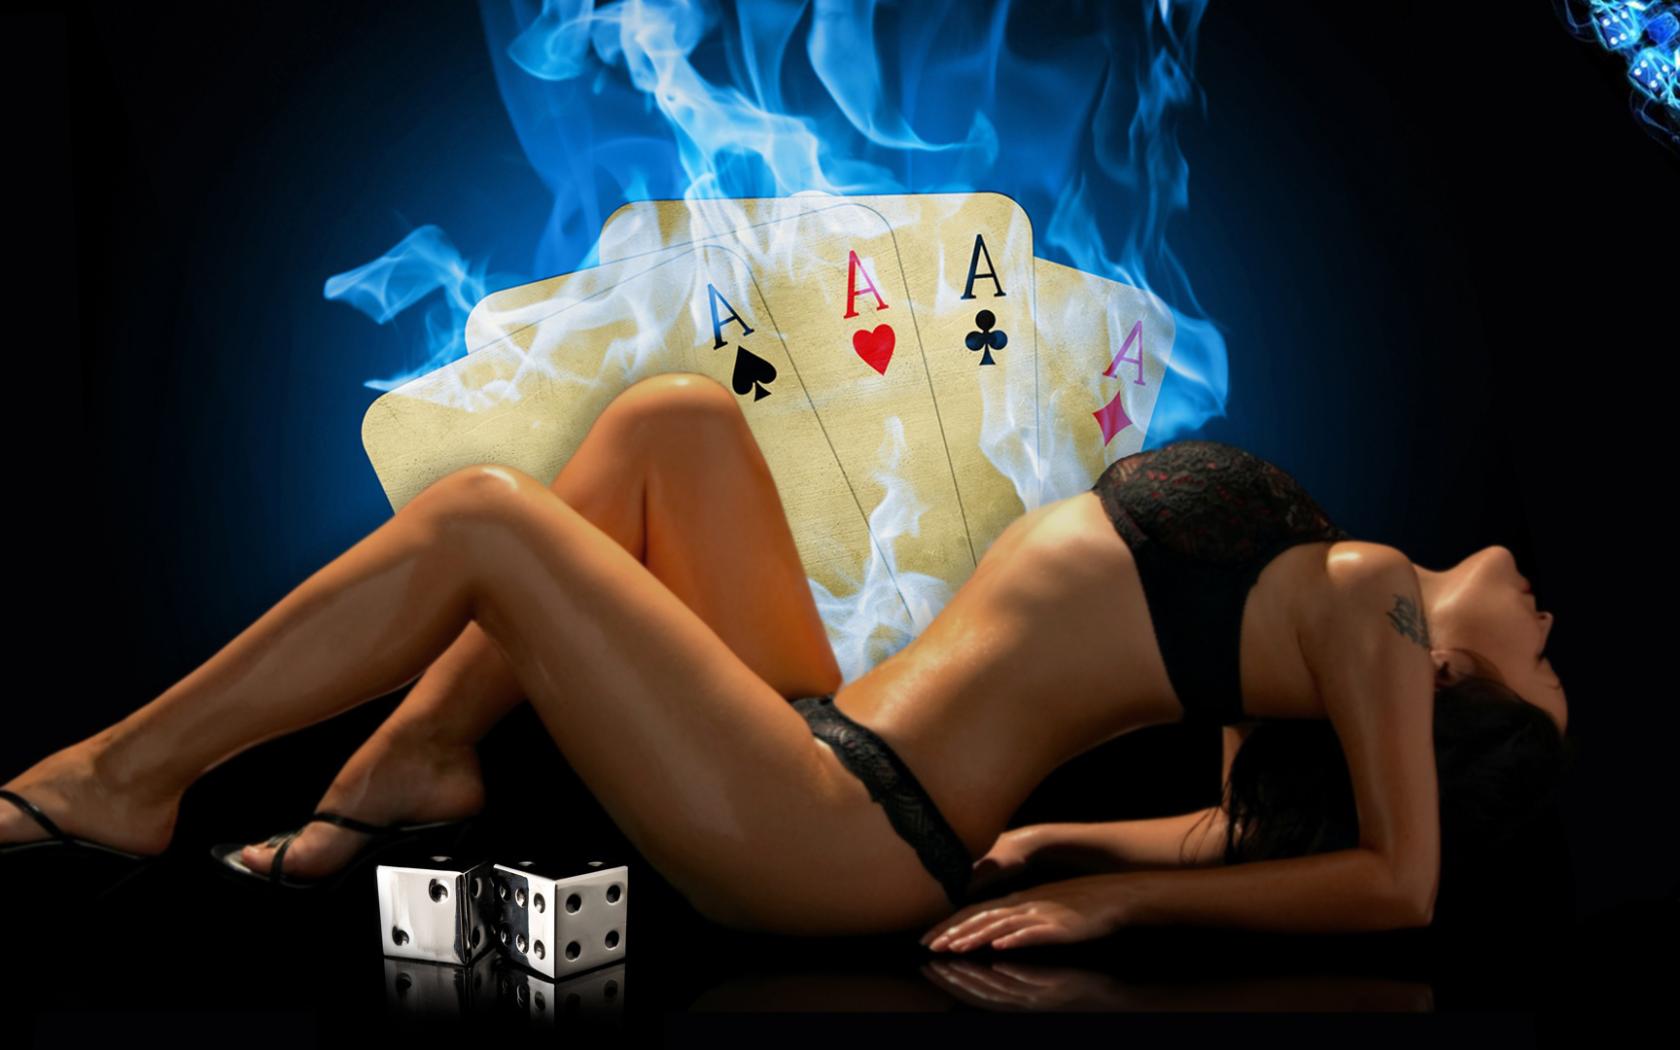 First time sex stories strip poker